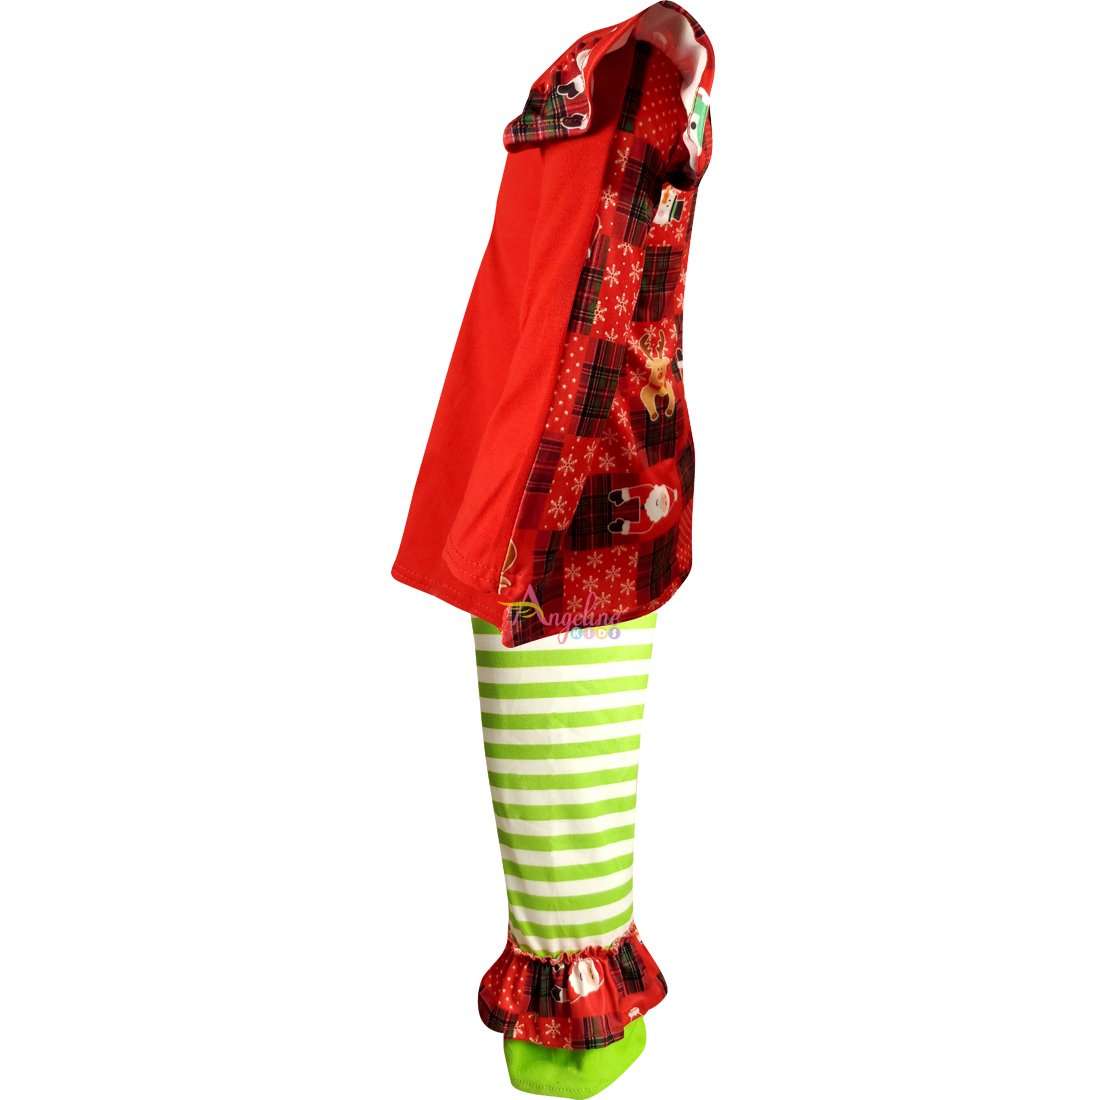 Angeline Kids:Baby Toddler Little Girls Christmas Tree & Reindeer Top Pants Set - Red Lime Stripes